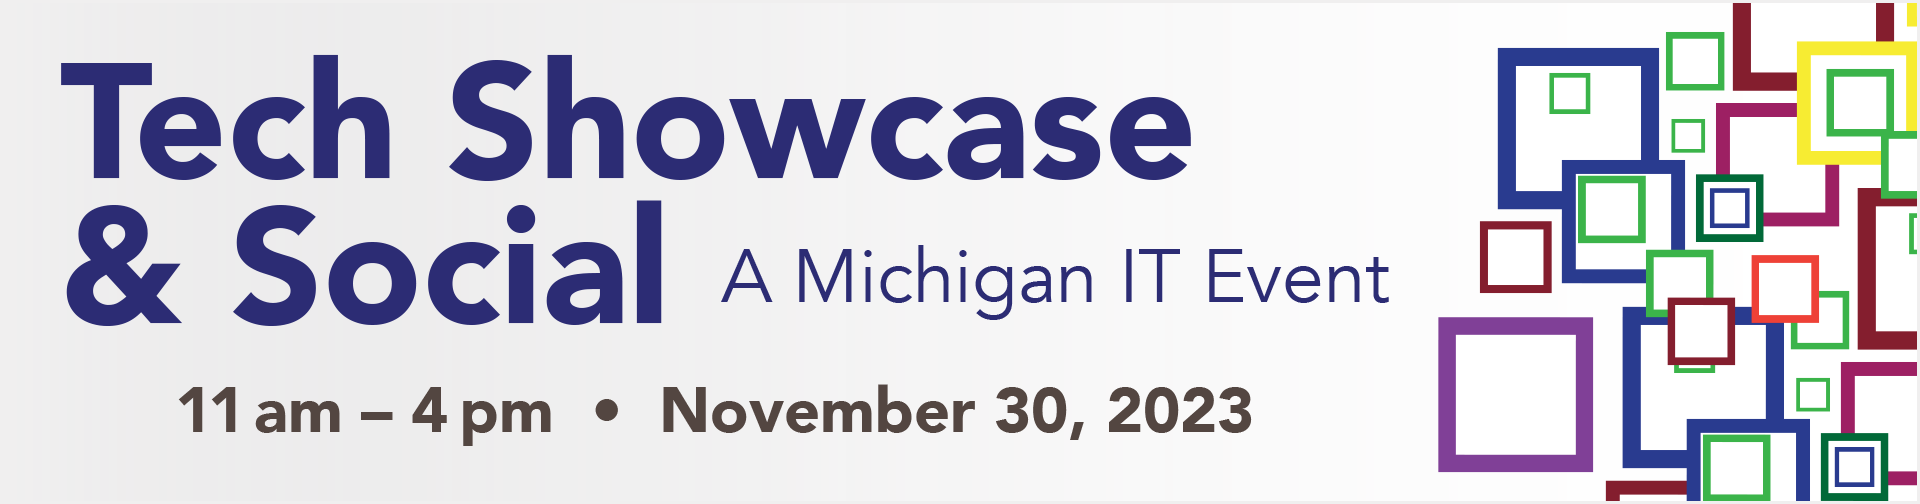 Tech Showcase & Social 11 a.m.-4 p.m. November 30, 2023